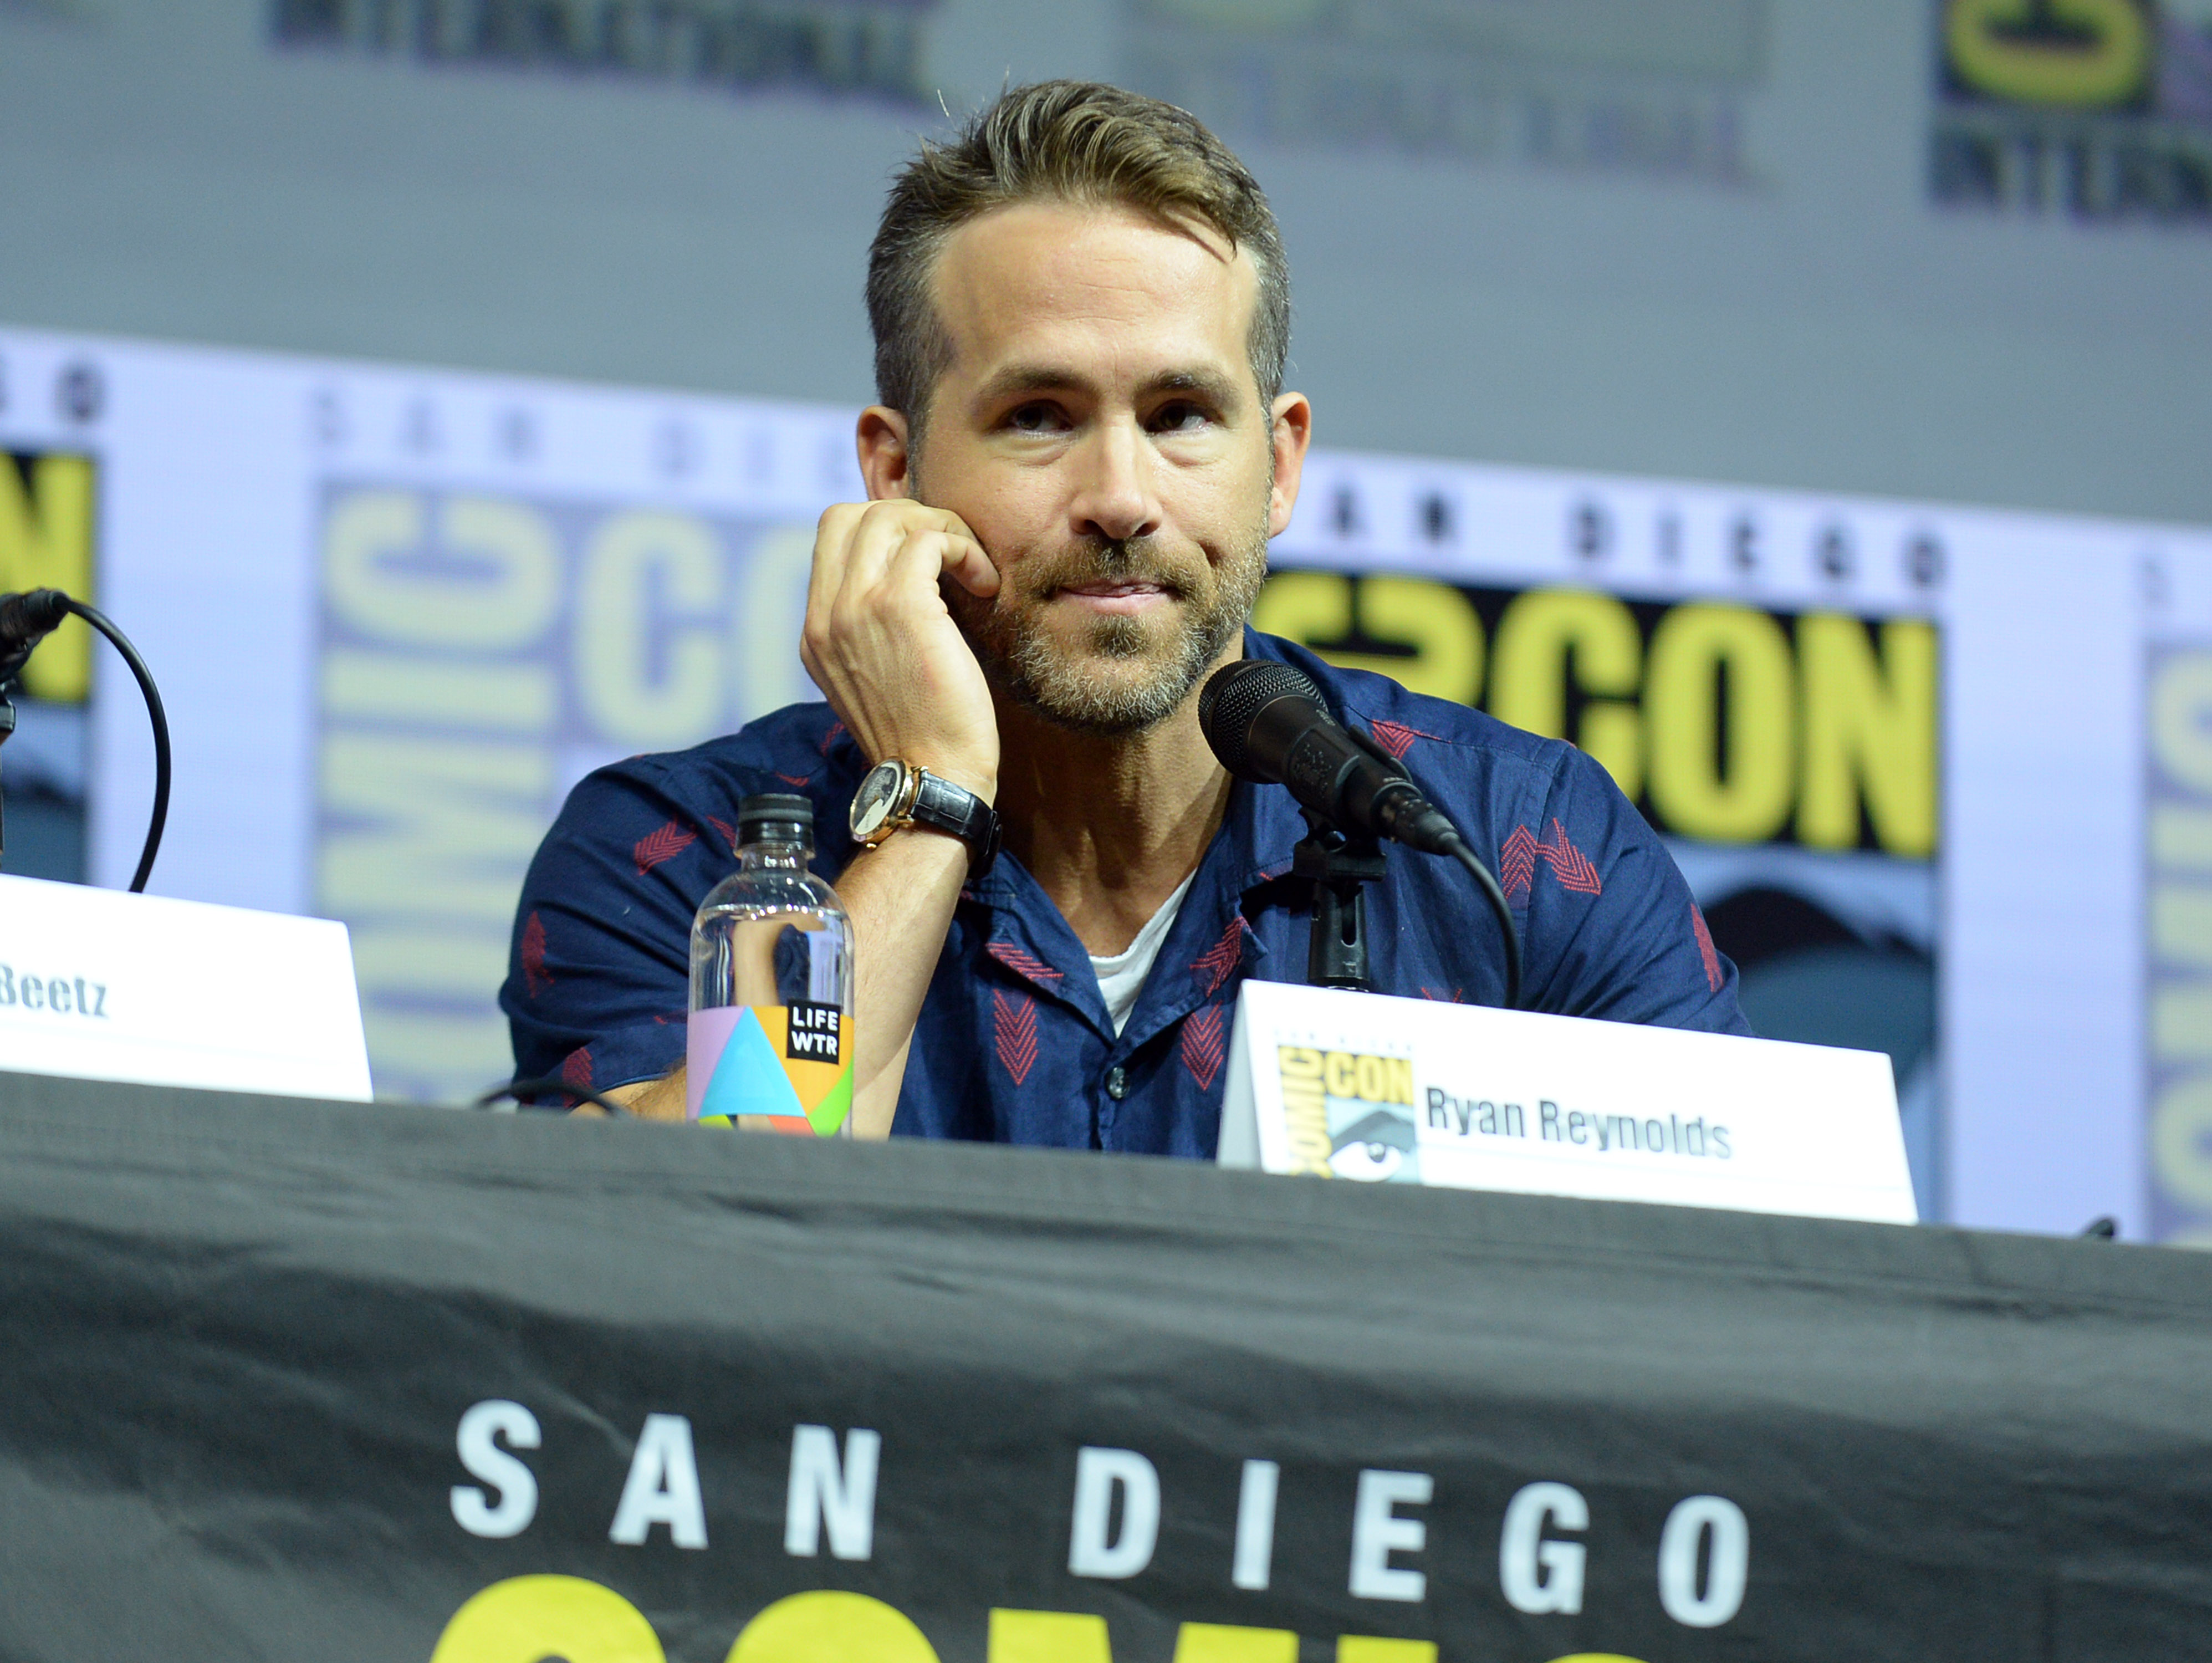 Ryan Reynolds'Deadpool' panel, Comic-Con International, San Diego, USA - 21 Jul 20182018 Comic-Con International: San Diego Day 3 - Deadpool 2 Panel